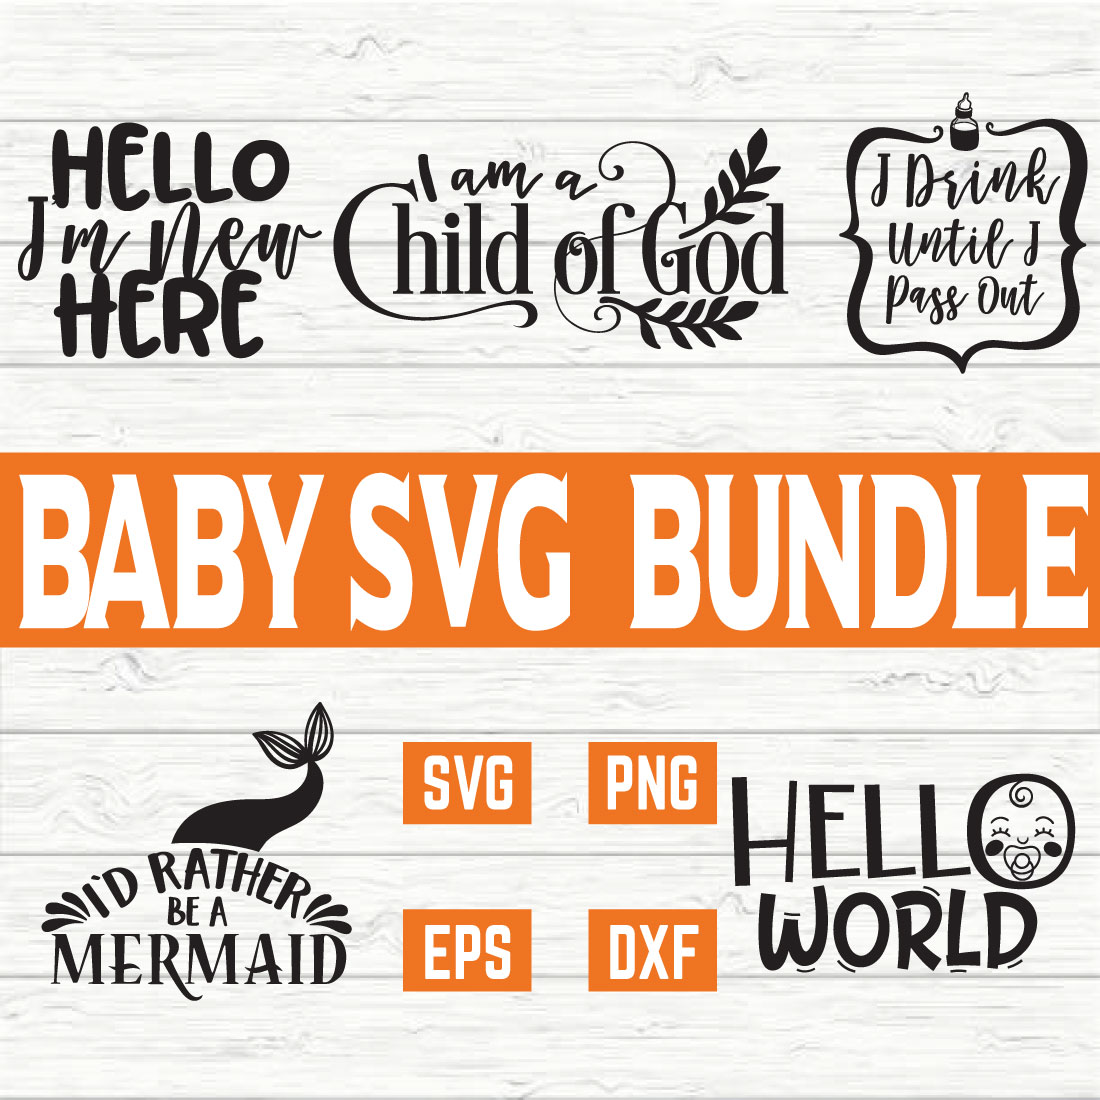 Baby Svg Bundle vol 2 cover image.